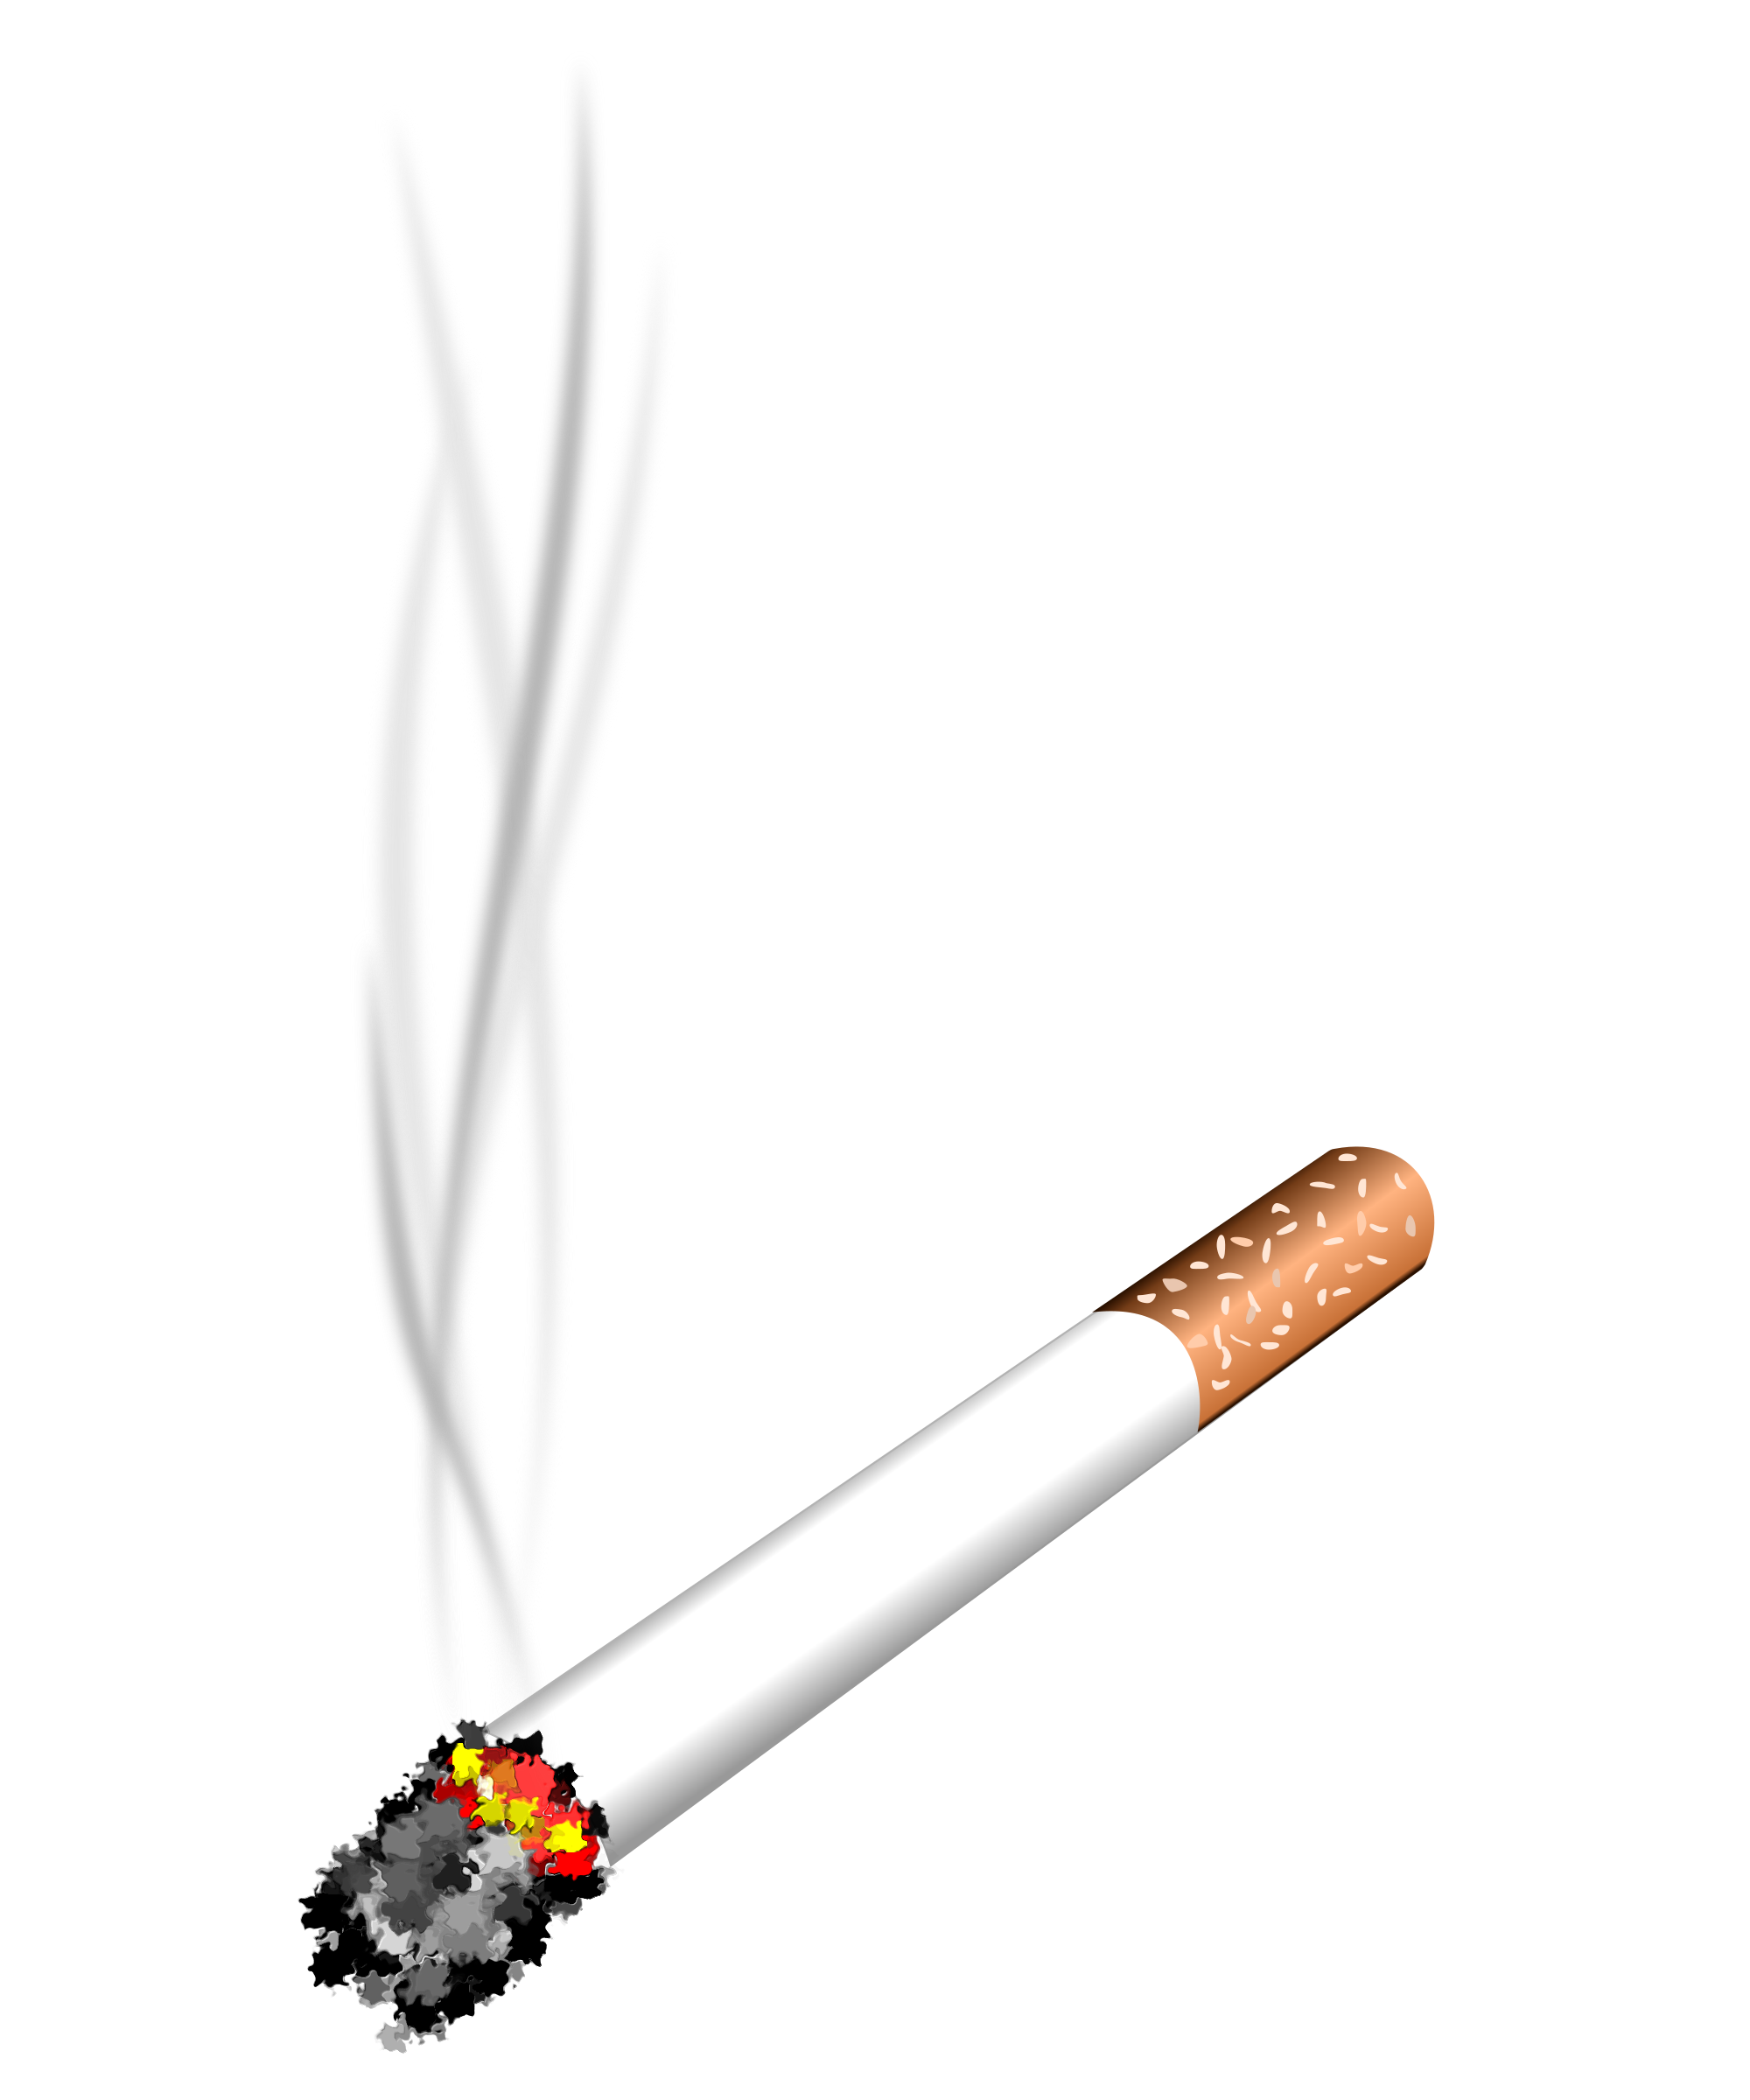 Thug Life Cigarette Transparent Image PNG Image